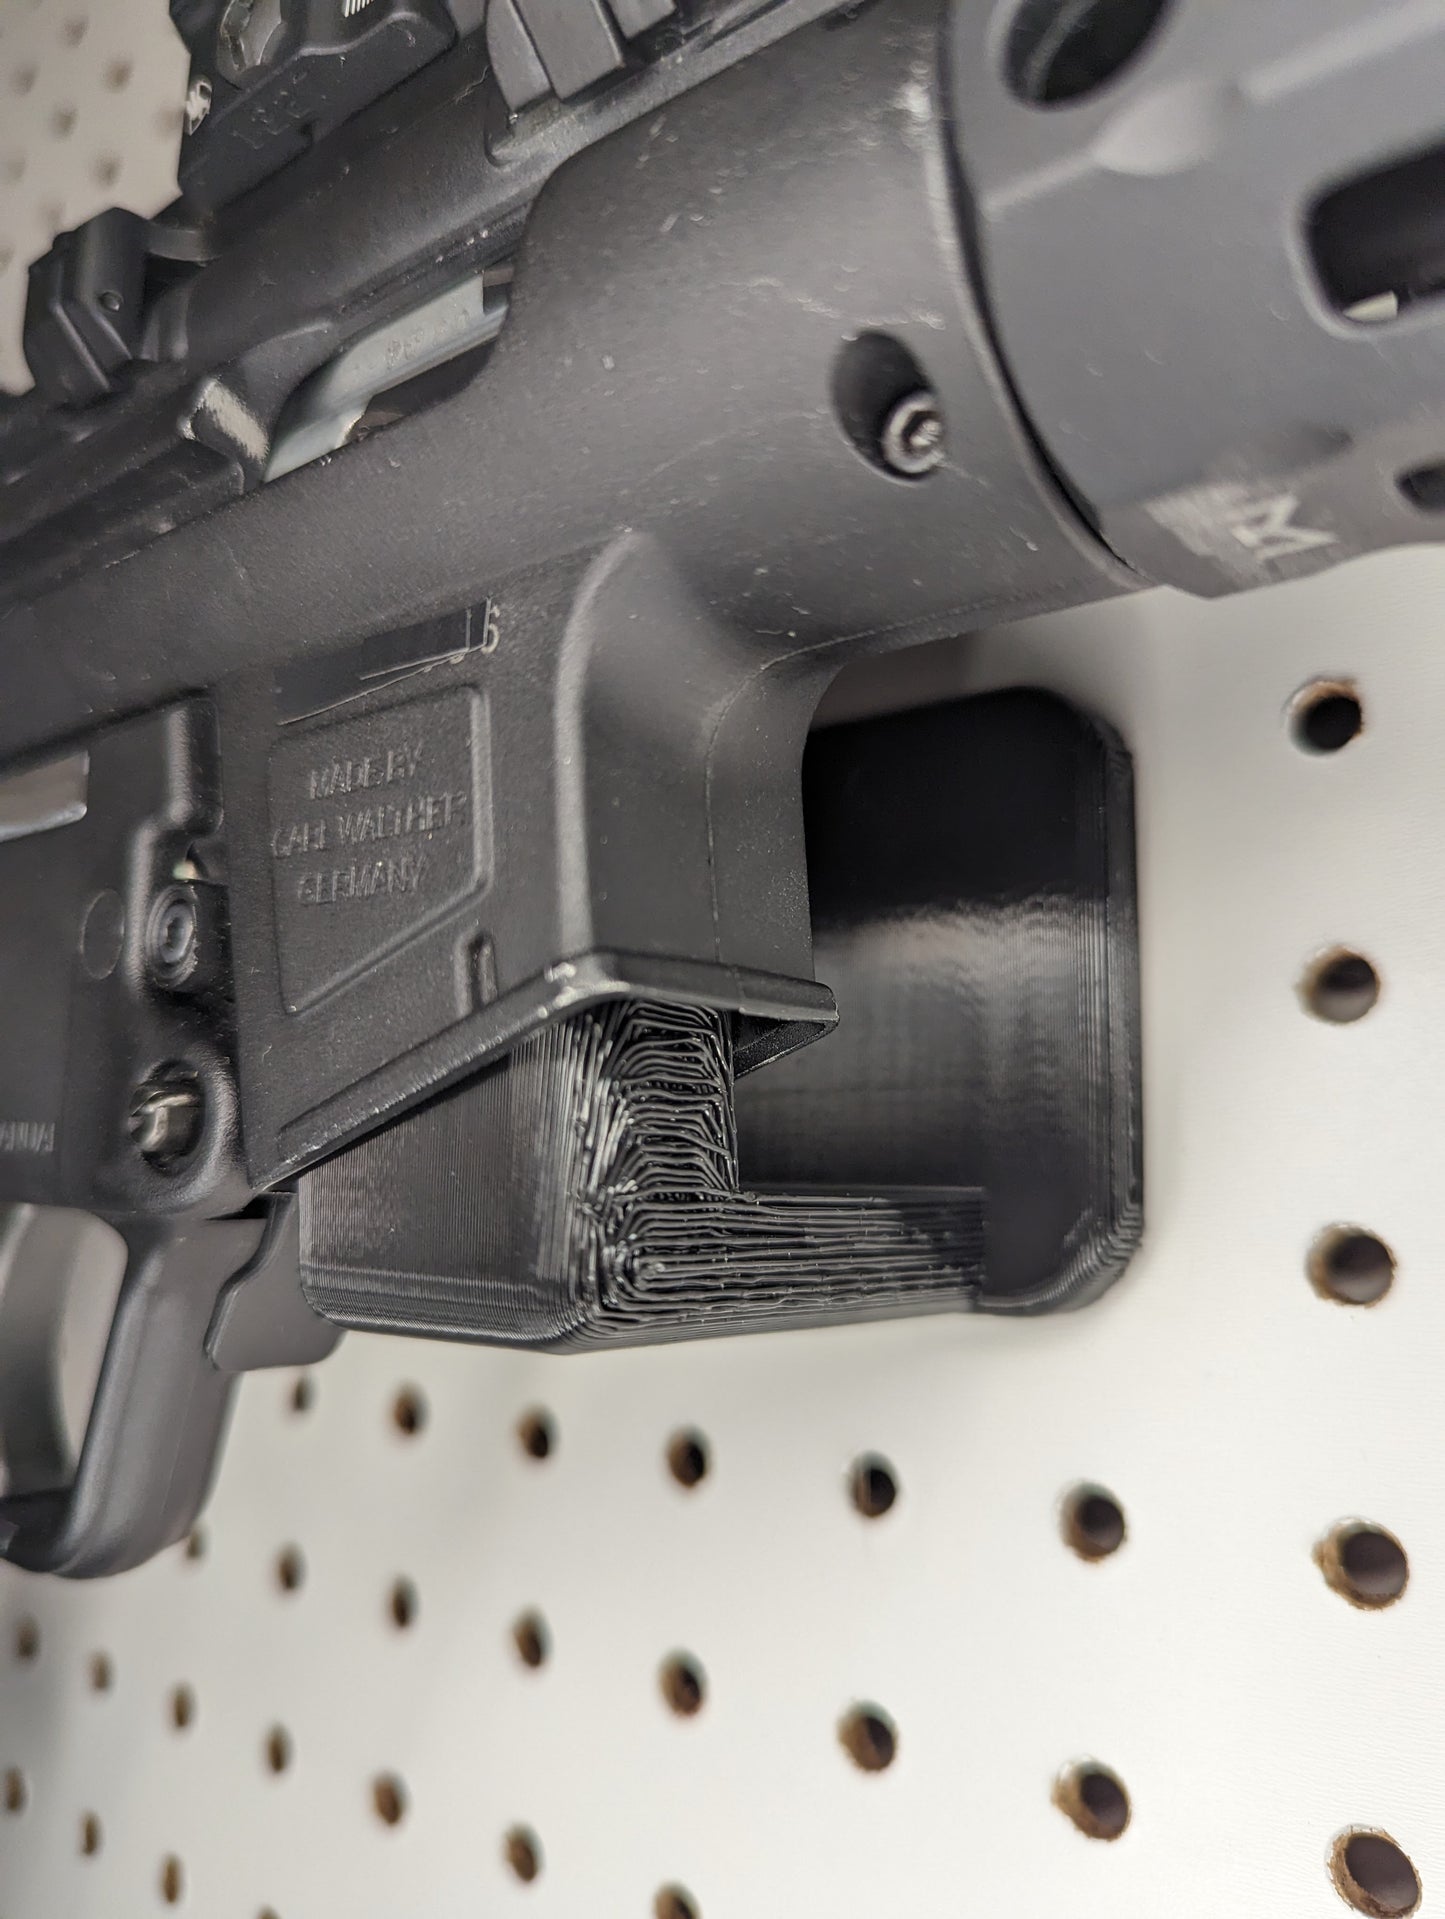 Magwell Mount for HK and GSG MP5 22 - Pegboard / IKEA Skadis / Wall Control / Vaultek | Rifle Holder Storage Rack